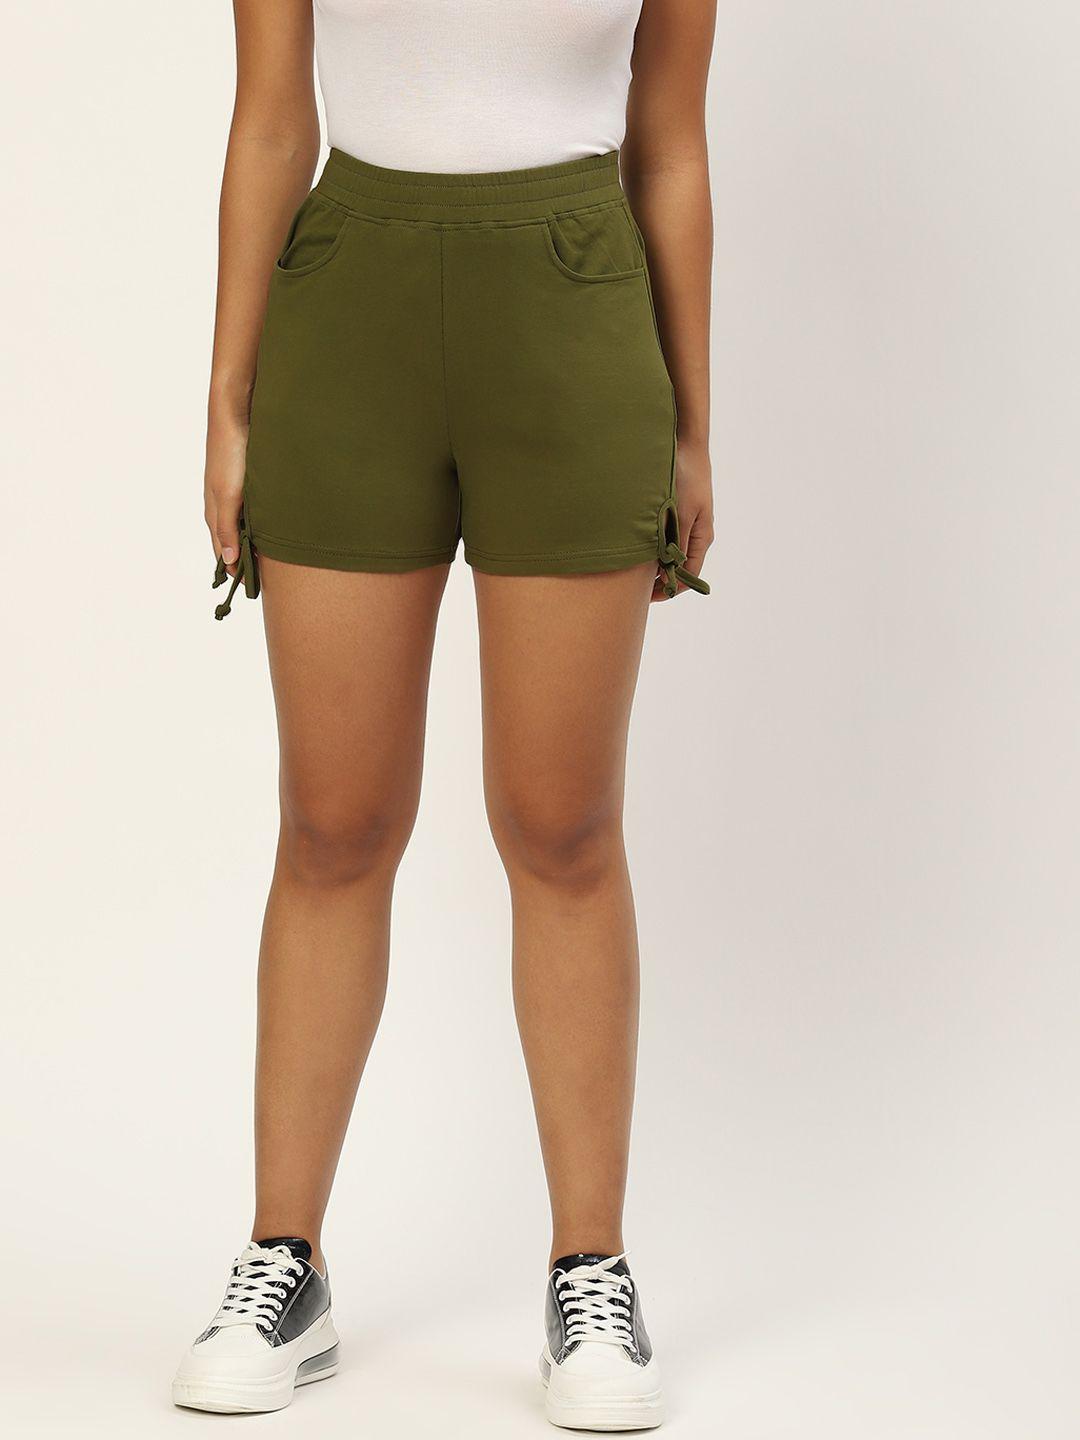 brinns women olive green shorts